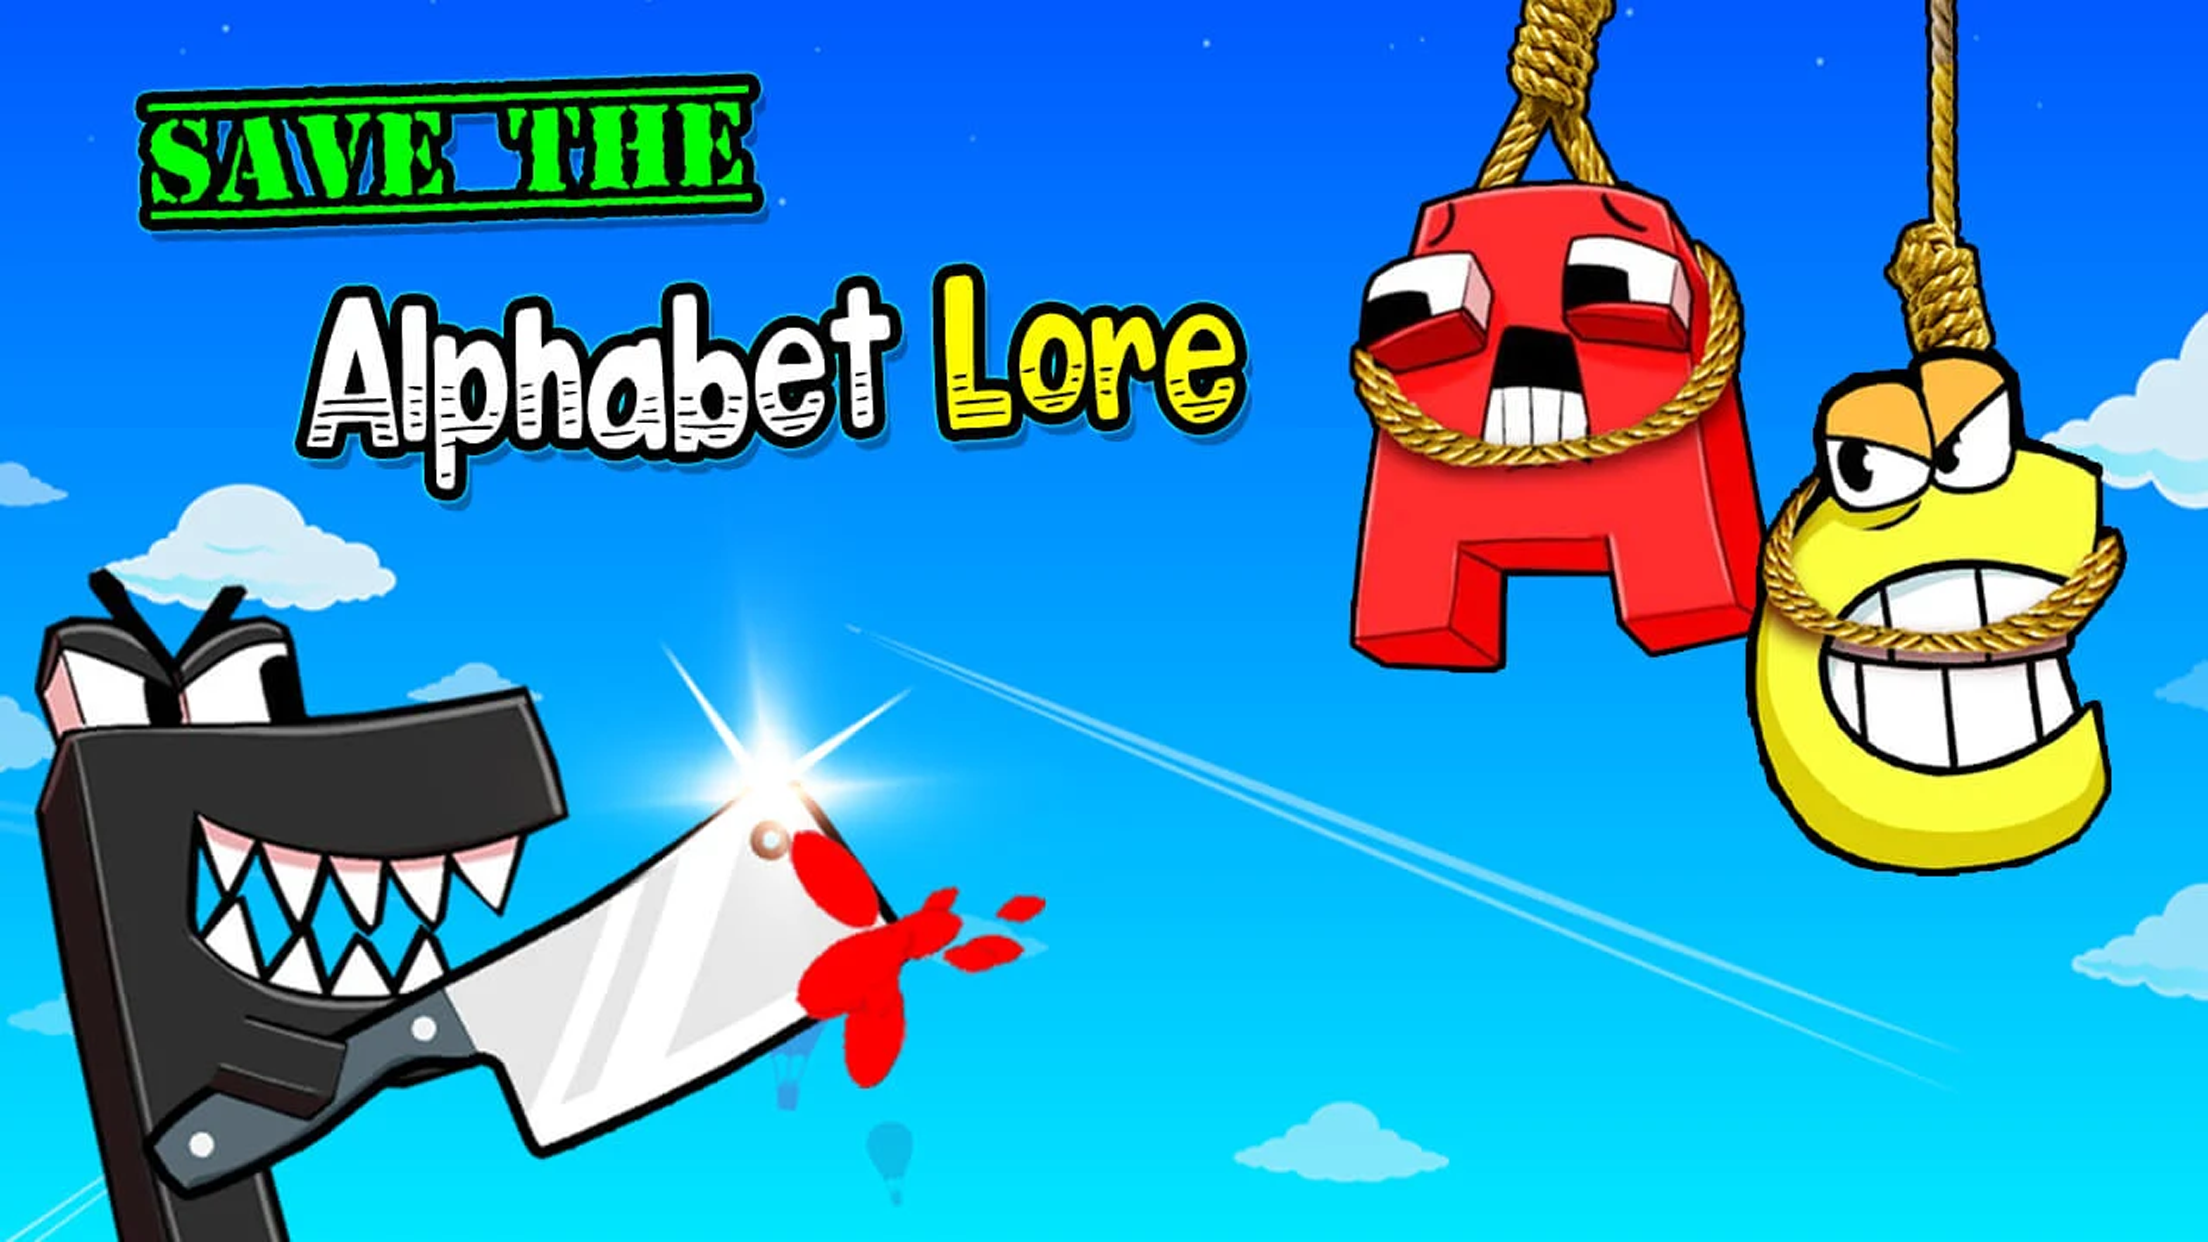 Alphabet Lore Game Online - Play Free